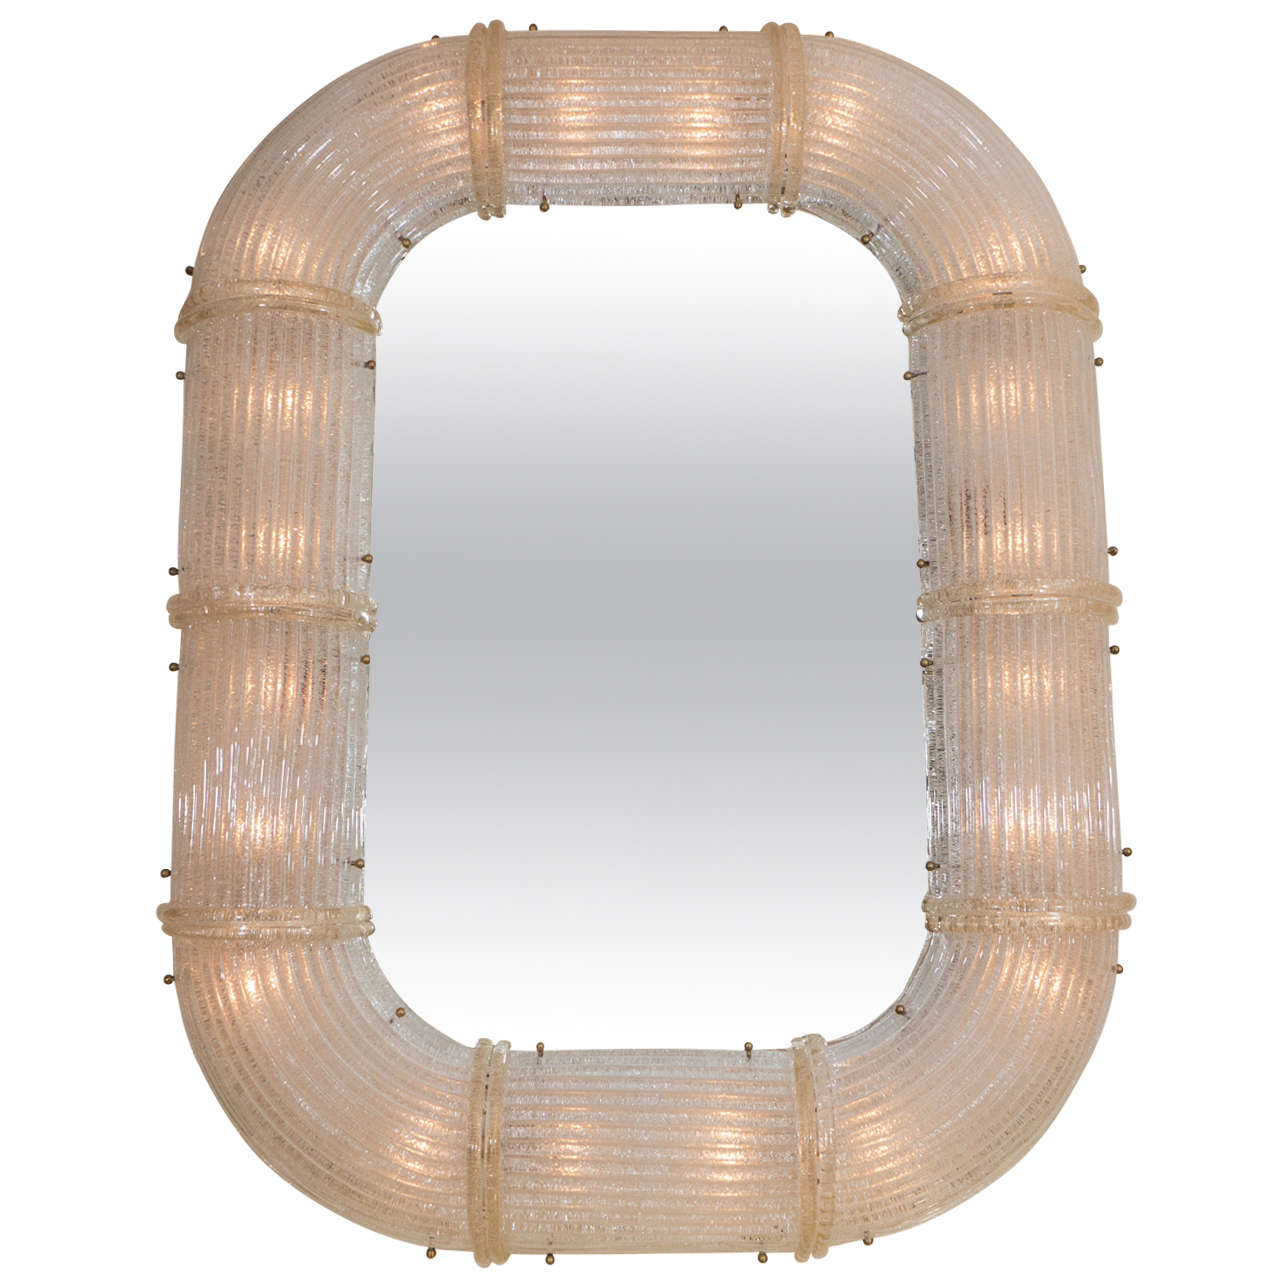 Illuminated fluted glass elliptical mirror